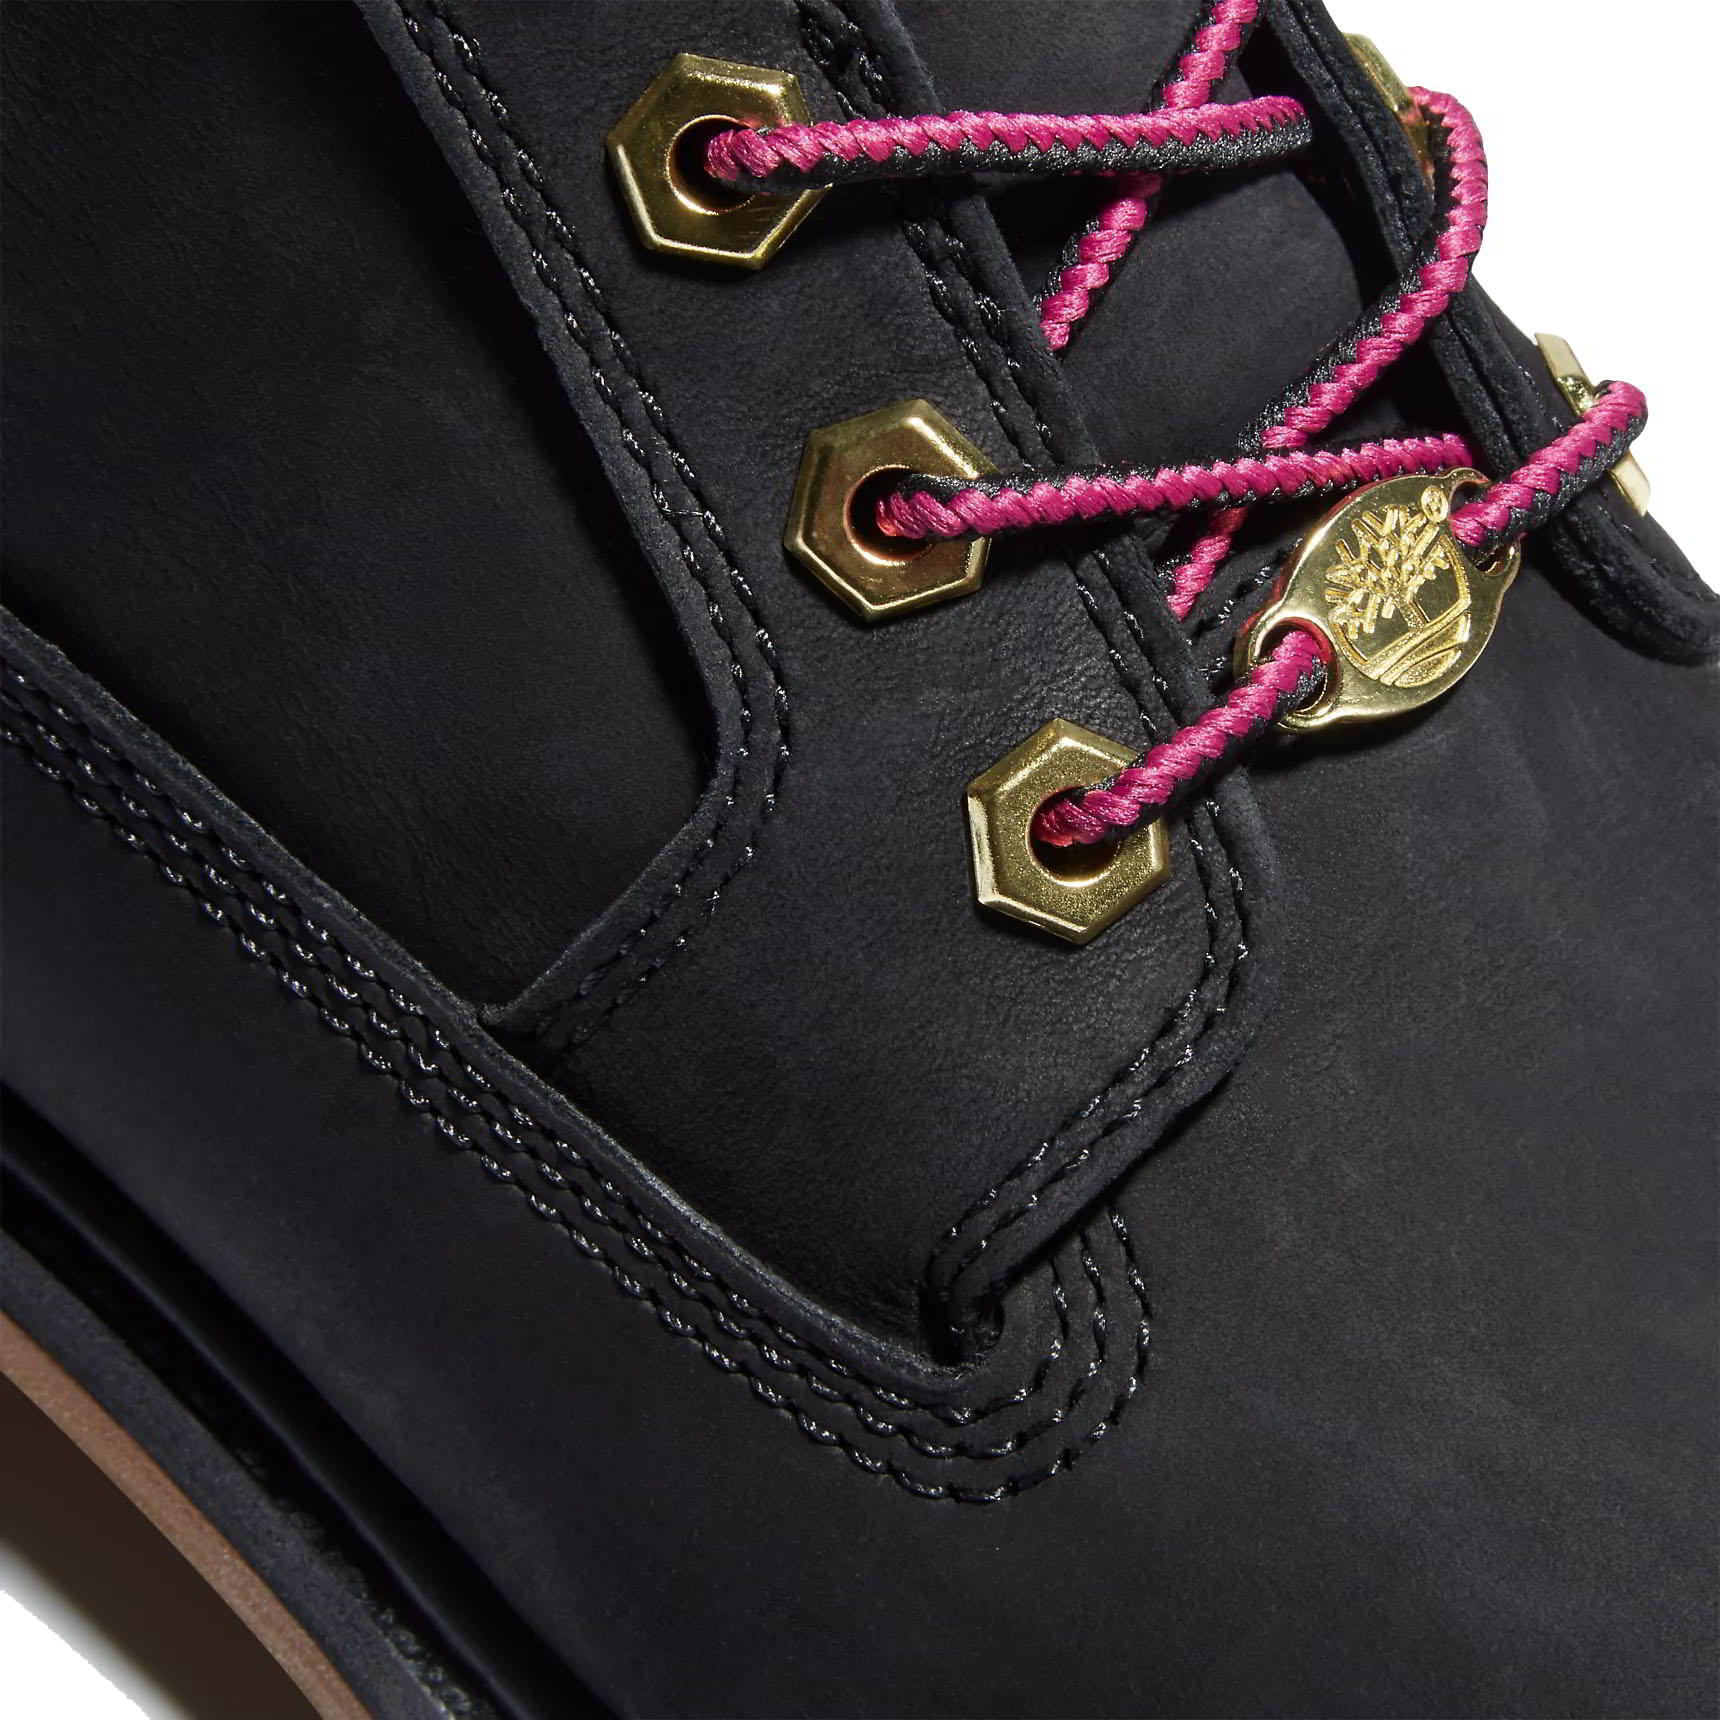 Timberland Womens Nellie Waterproof Chukka Boots - Black Pink A2JSA Mens 2951